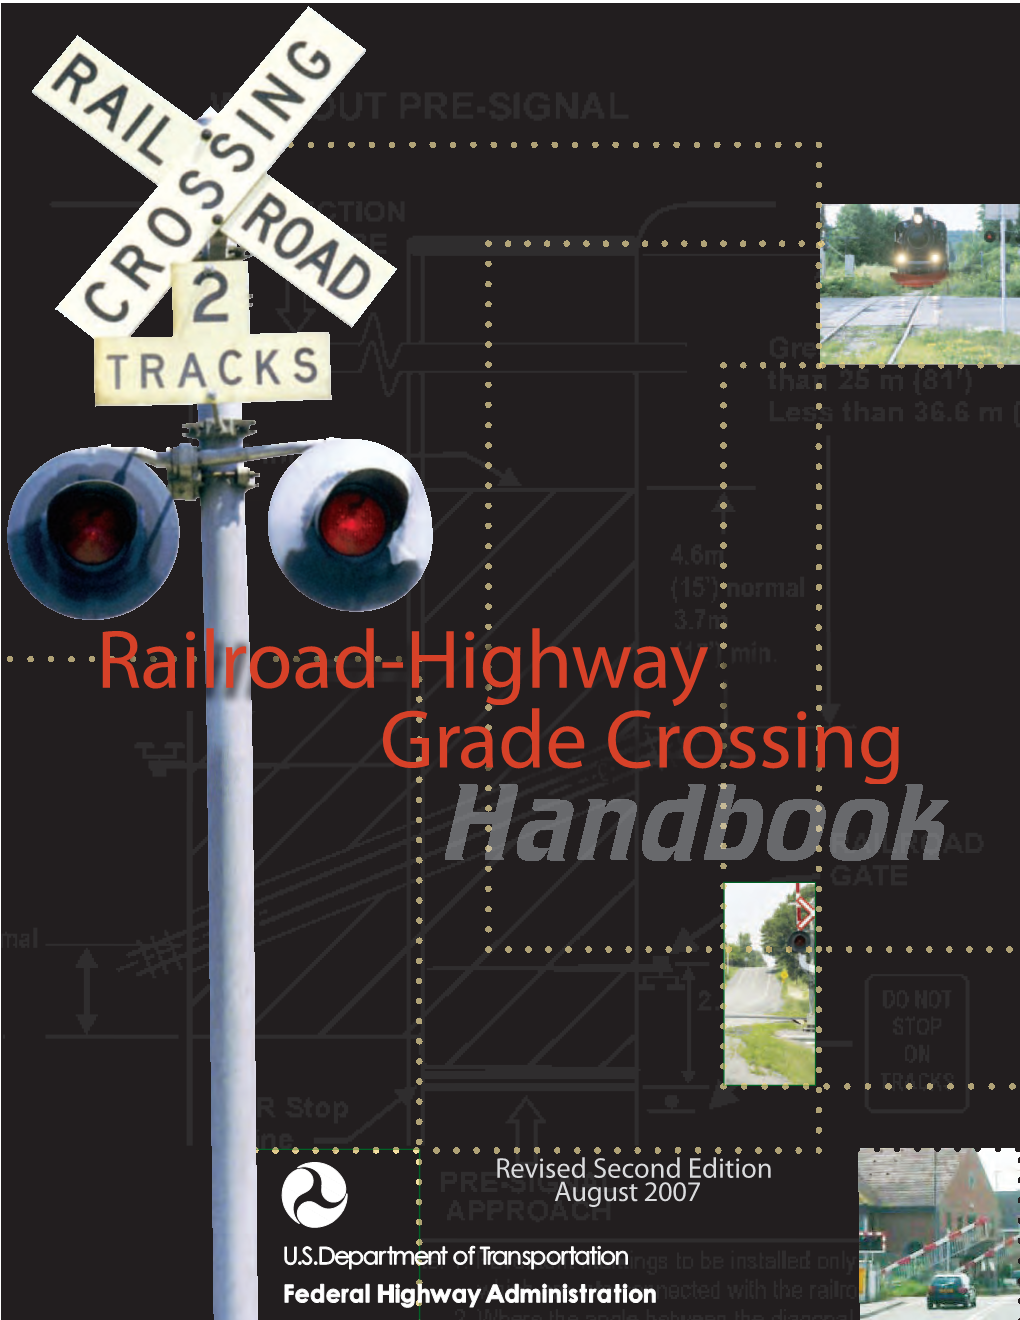 Railroad-Highway Grade Crossing Handbook - Revised Second August 2007 Edition 2007 6